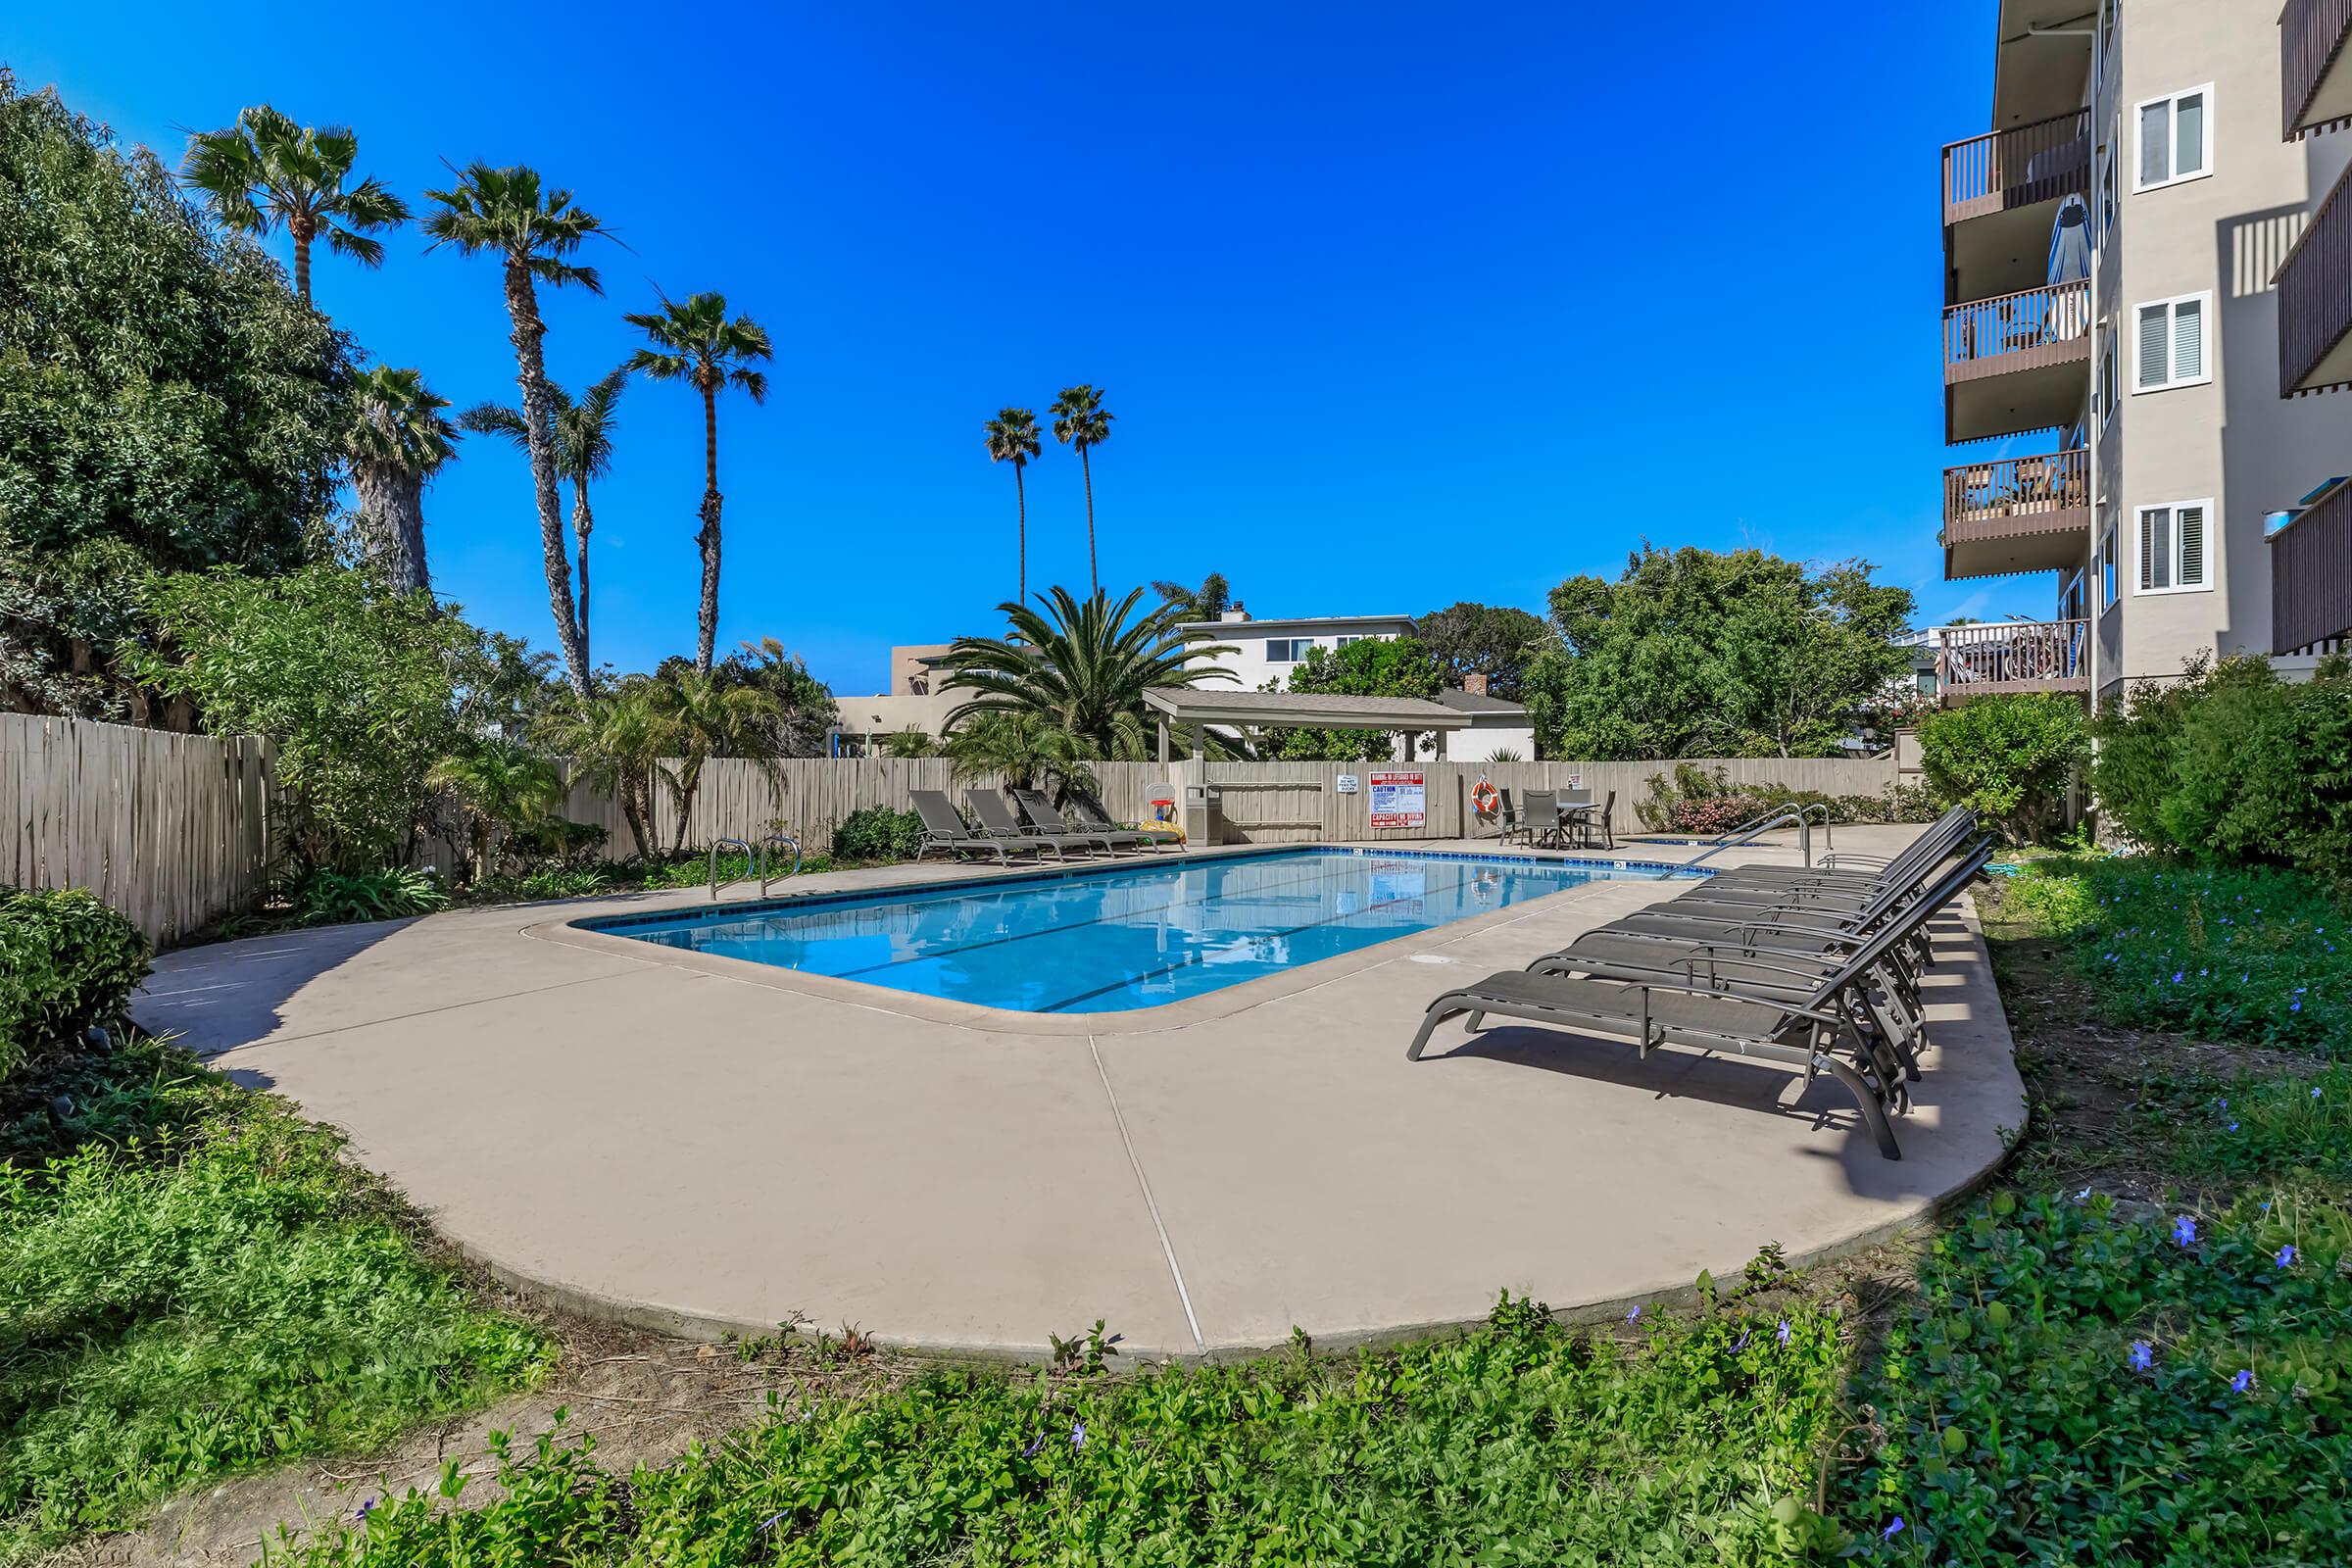 Relax poolside at Casa Del Mar in San Diego, CA